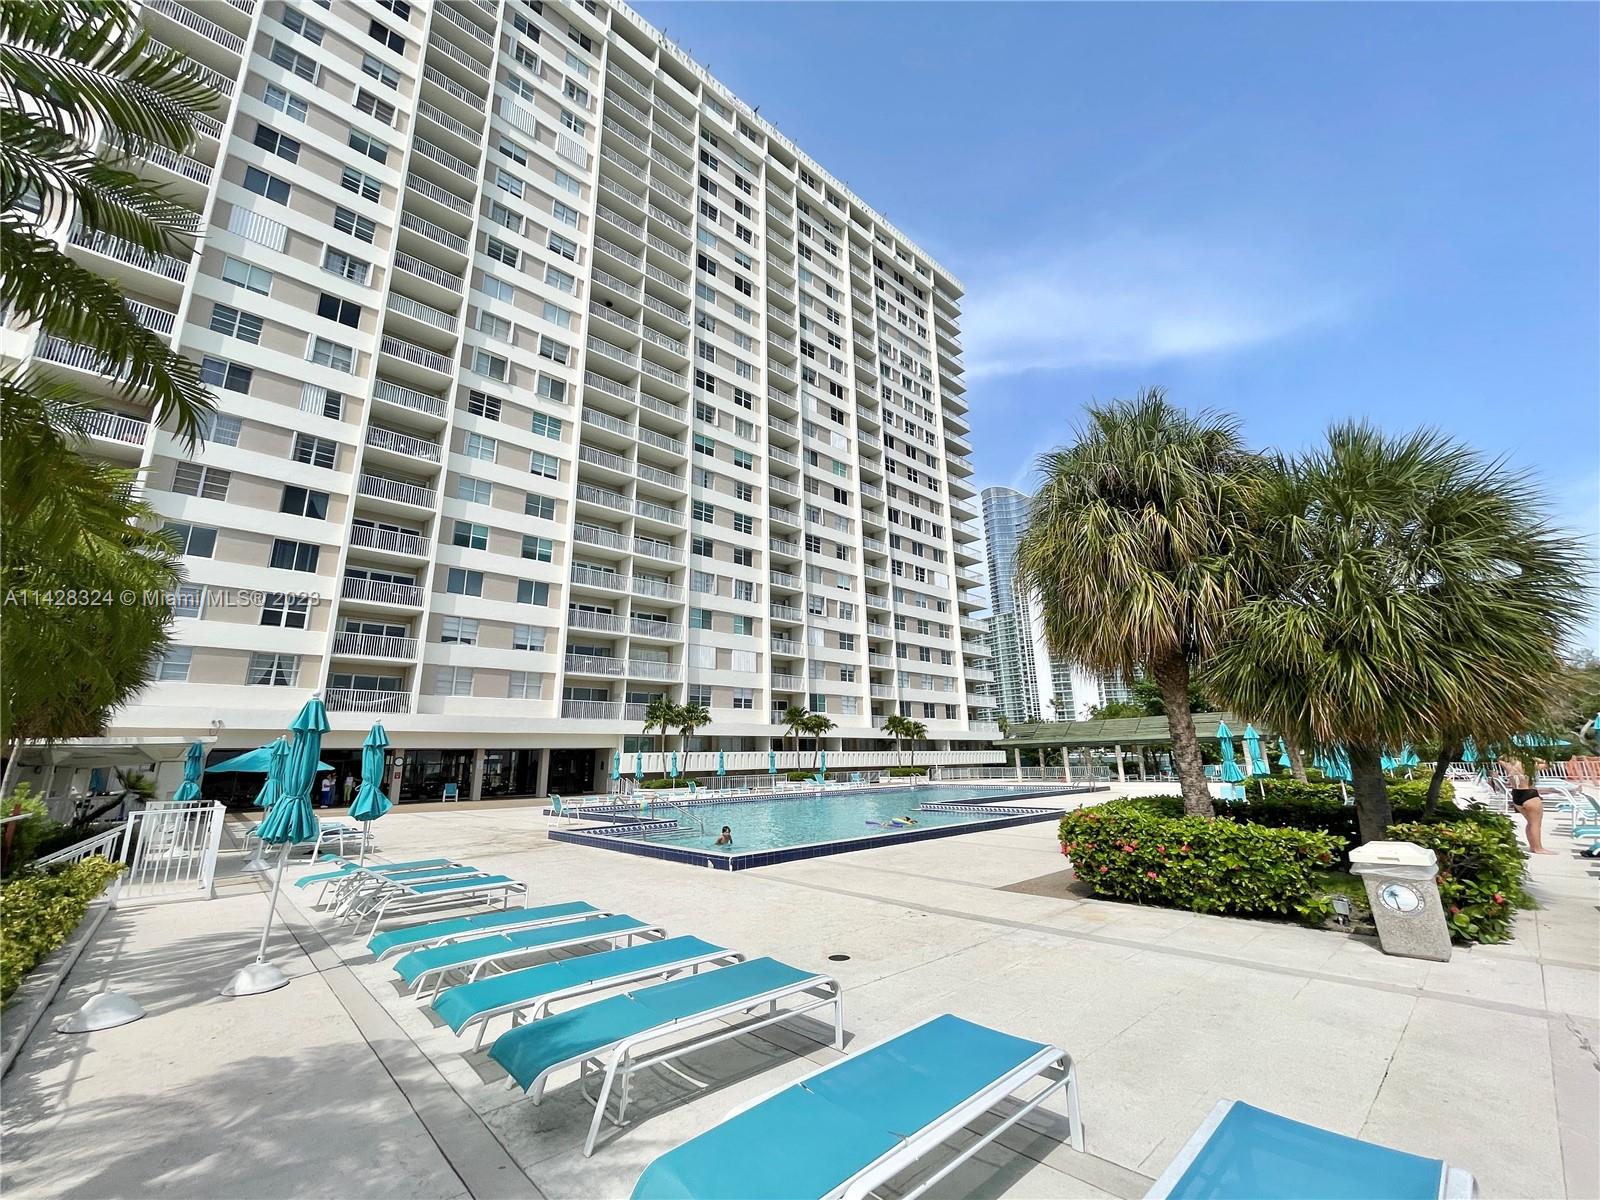 Rental Property at 300 Bayview Dr 1015, Sunny Isles Beach, Miami-Dade County, Florida - Bedrooms: 2 
Bathrooms: 2  - $4,000 MO.